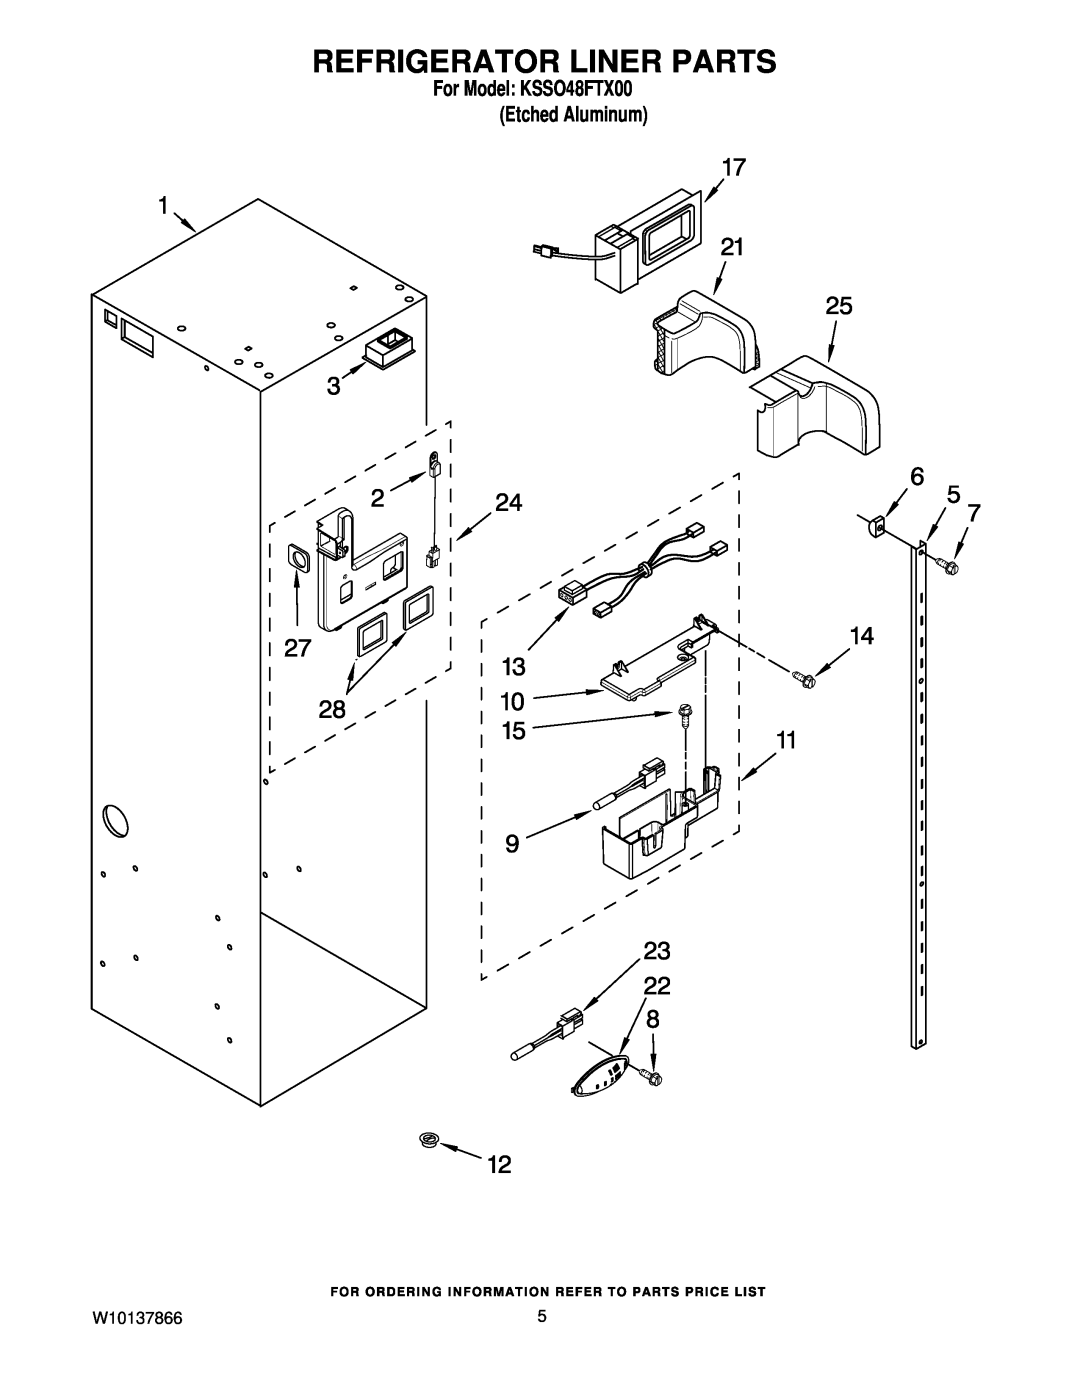 KitchenAid manual Refrigerator Liner Parts, W10137866, For Model KSSO48FTX00 Etched Aluminum 